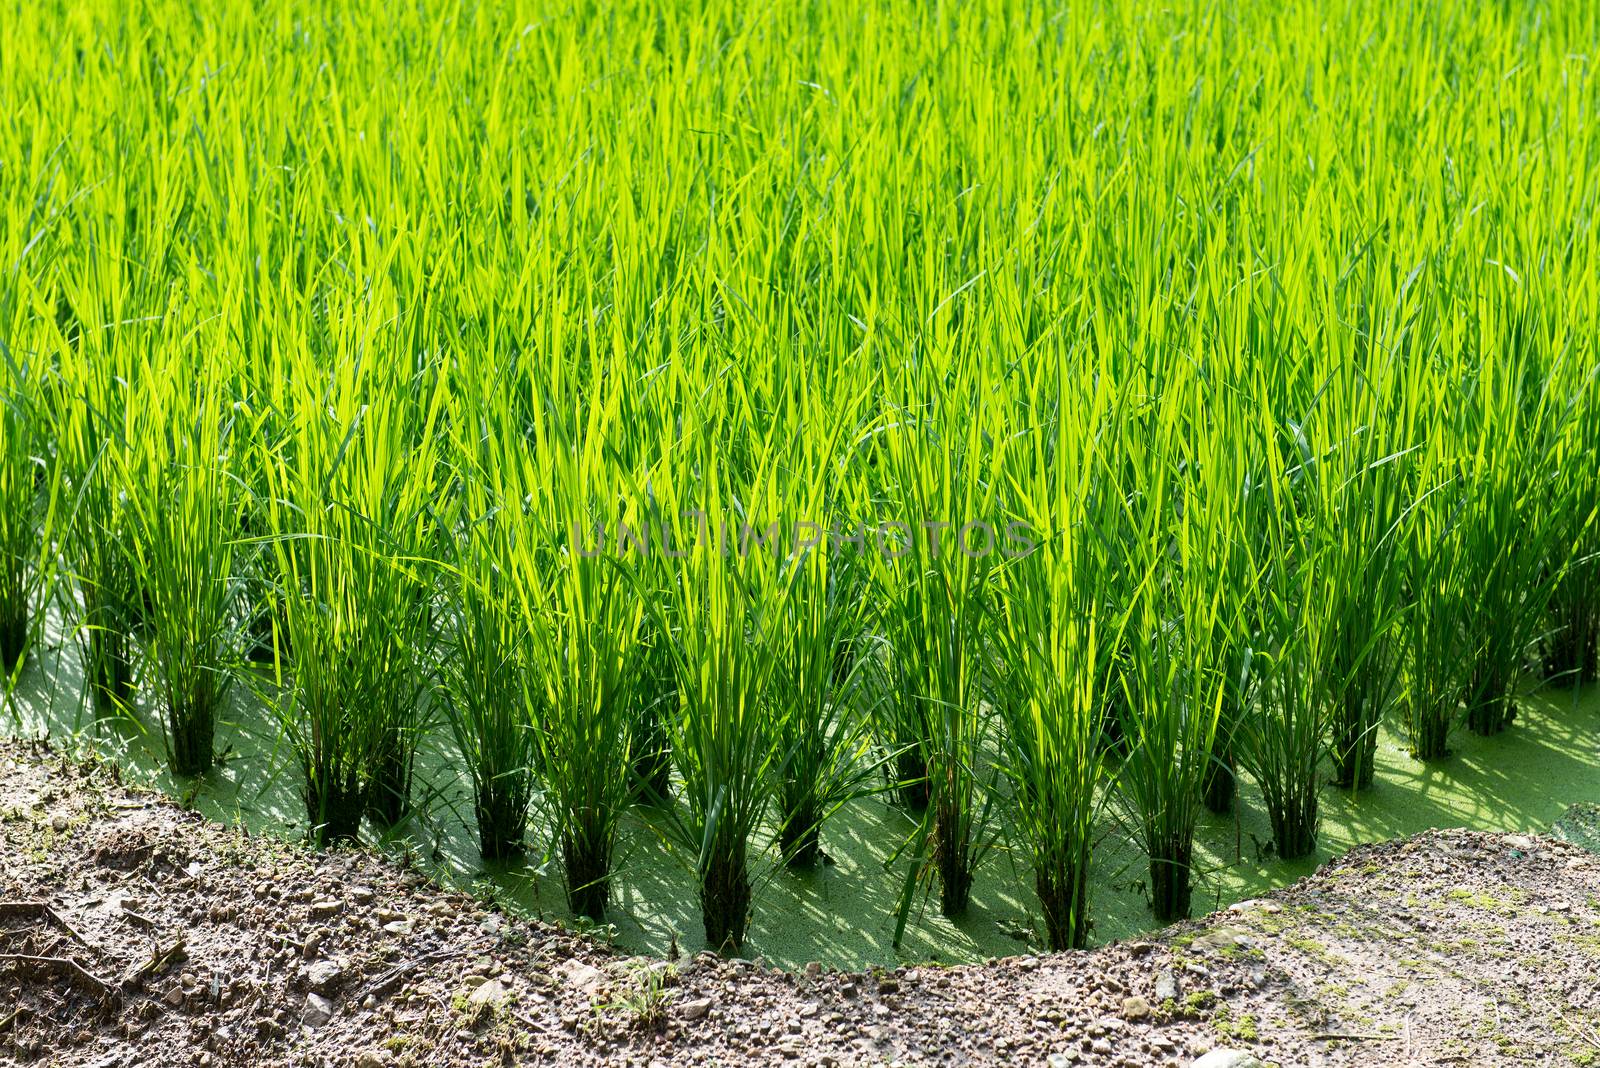 Green rice field background by Arrxxx